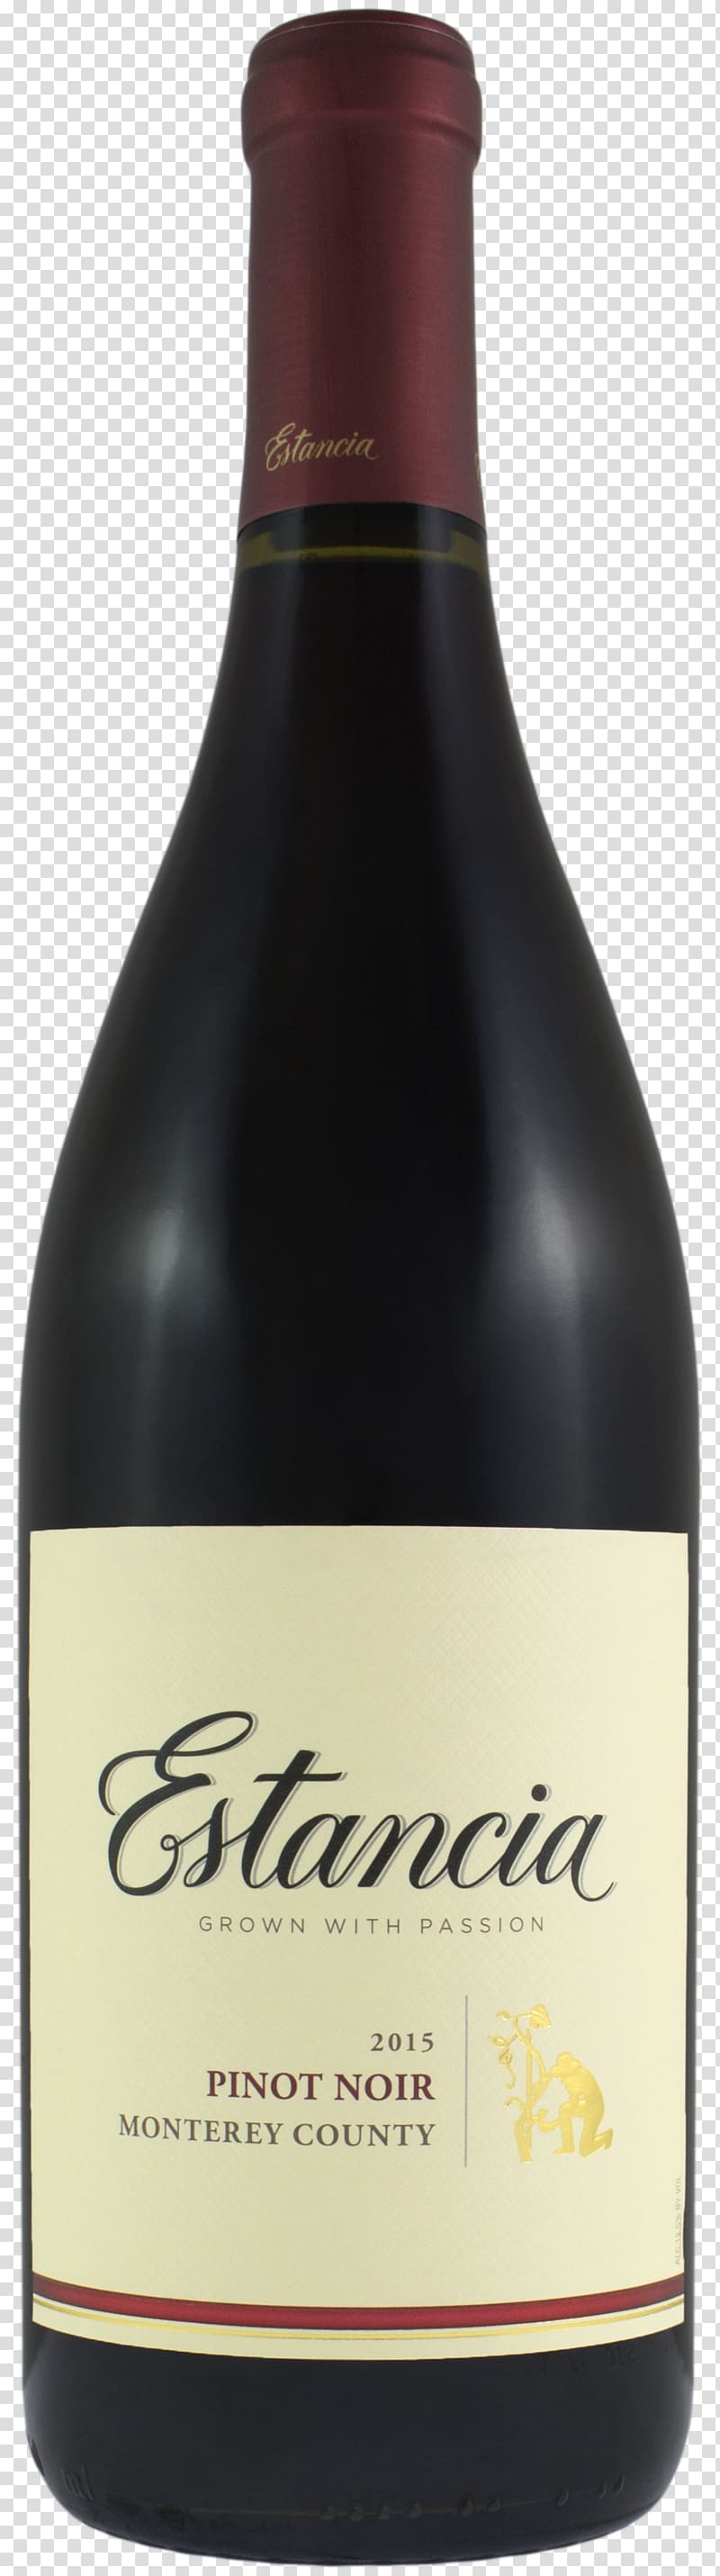 Nebbiolo Husch Vineyards Wine Pinot noir Bodegas Muga, wine transparent background PNG clipart